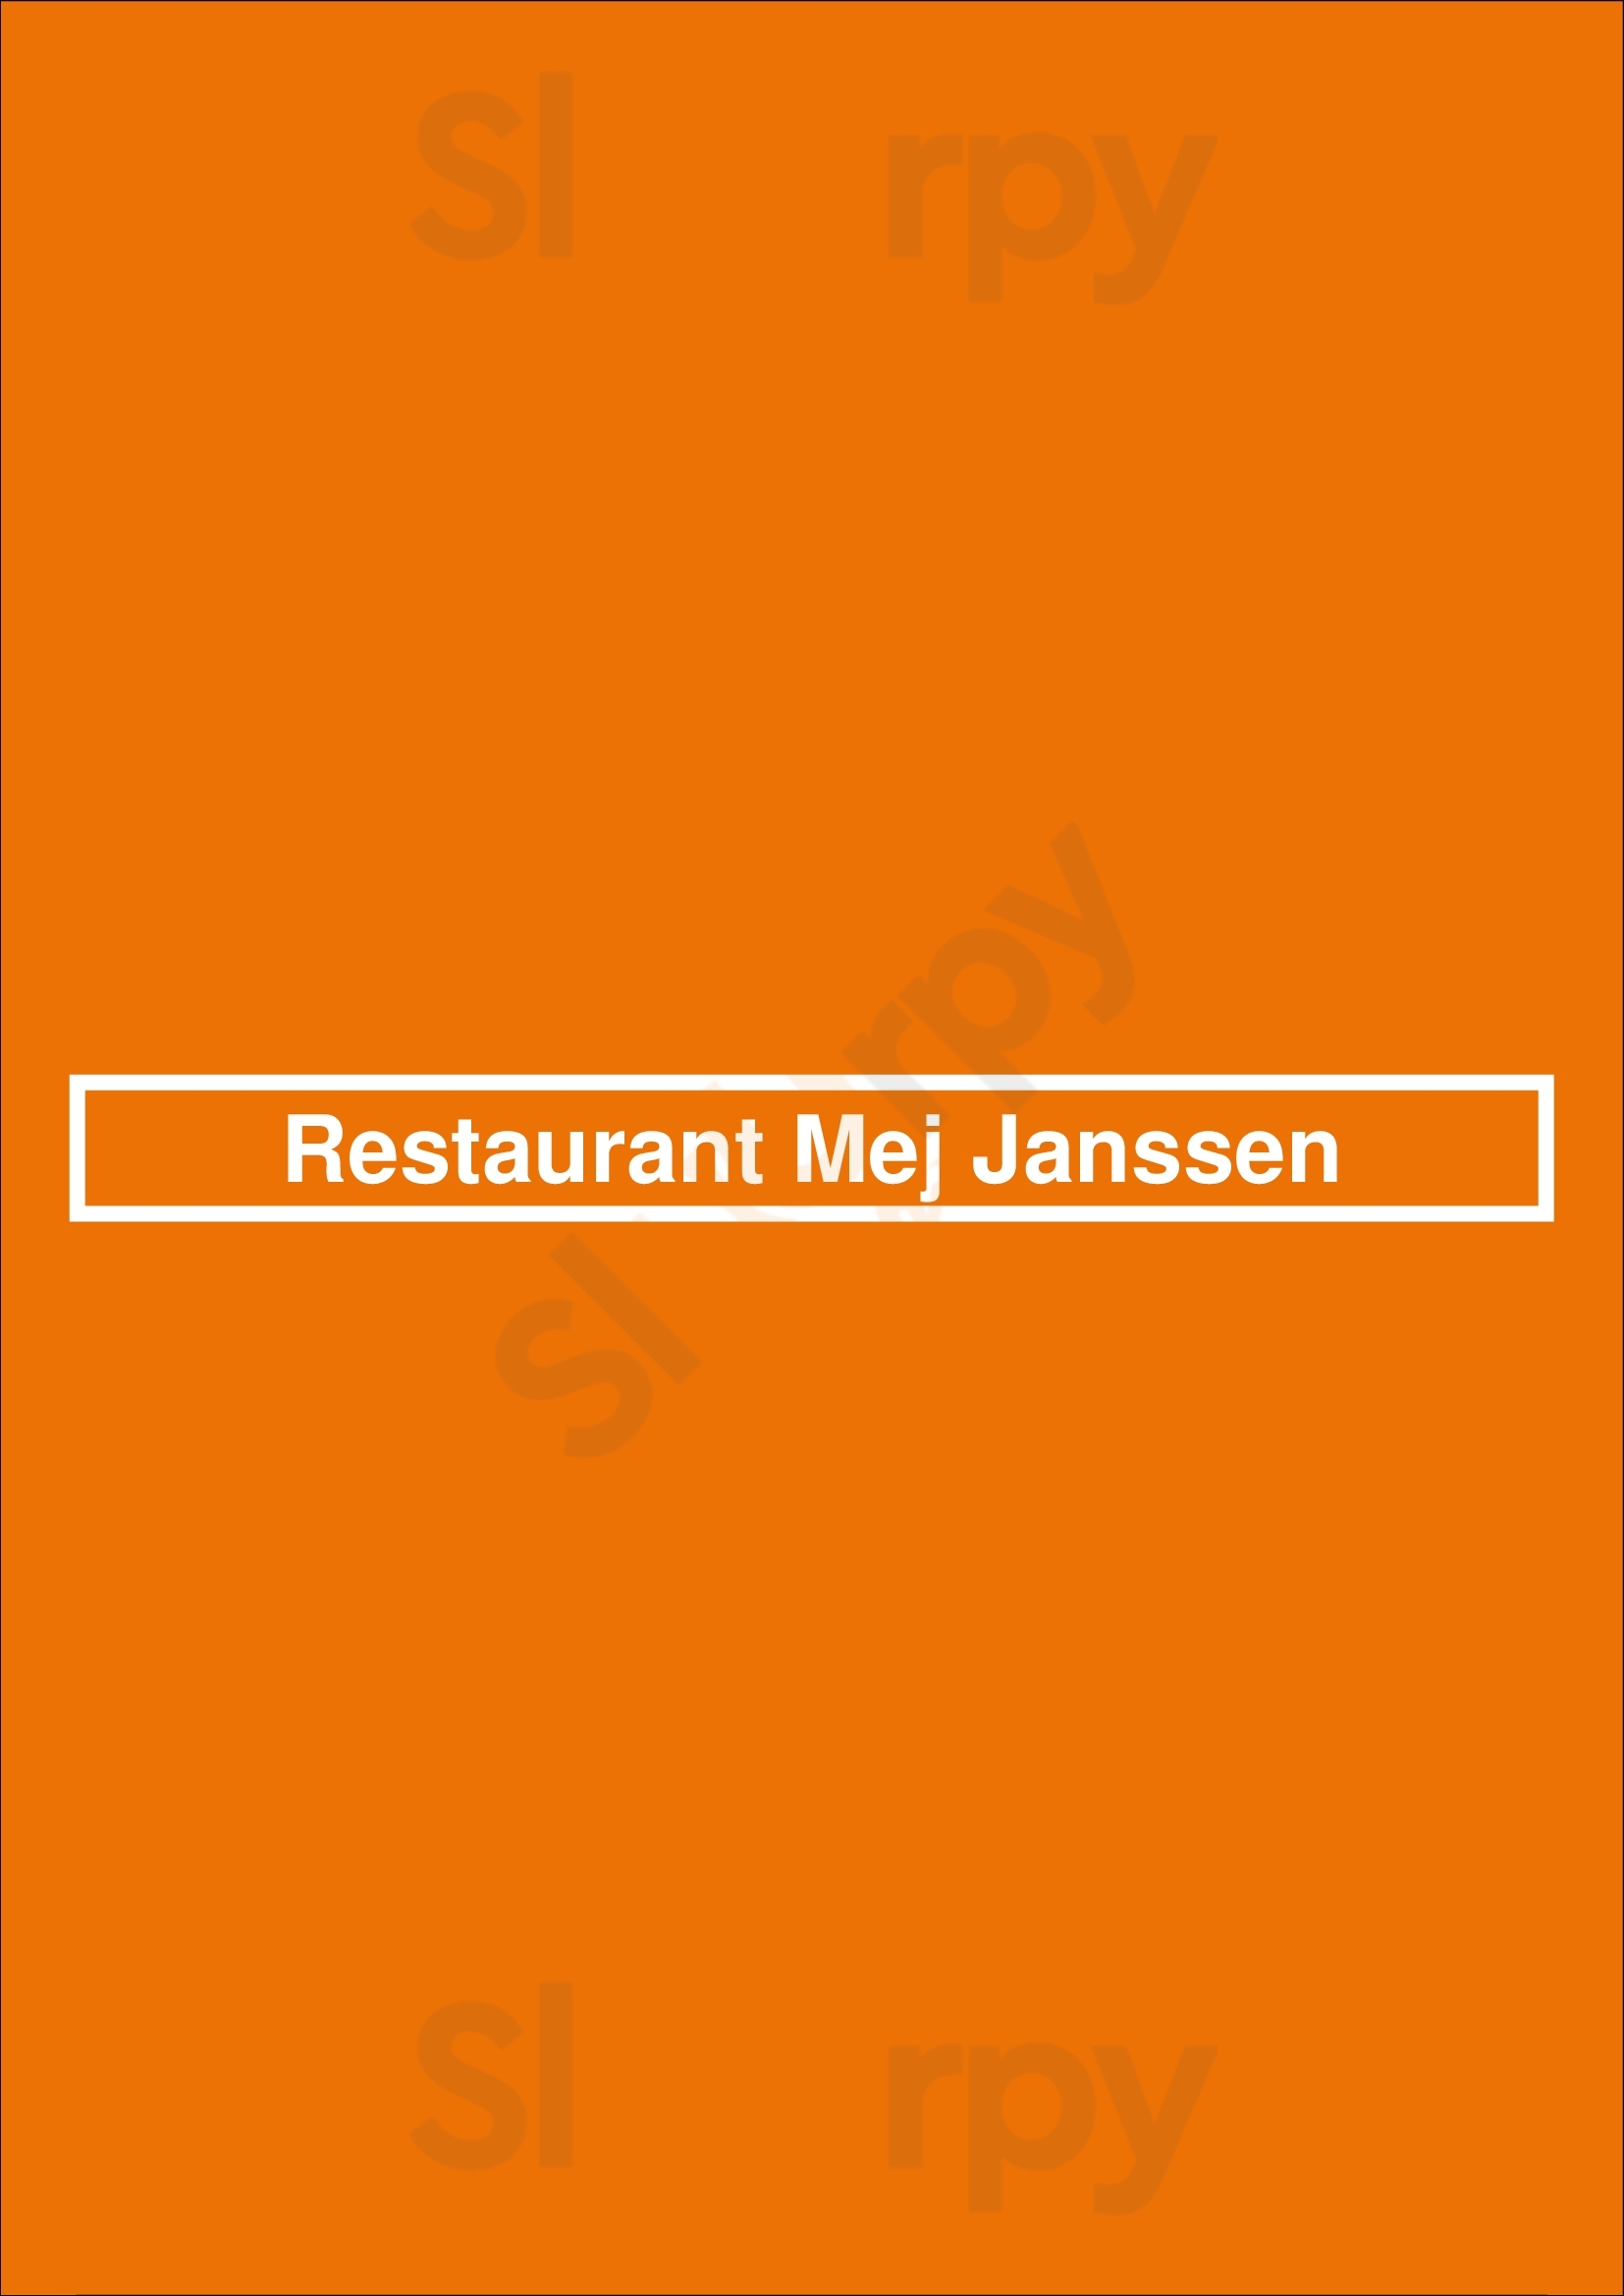 Restaurant Mej Janssen Utrecht Menu - 1